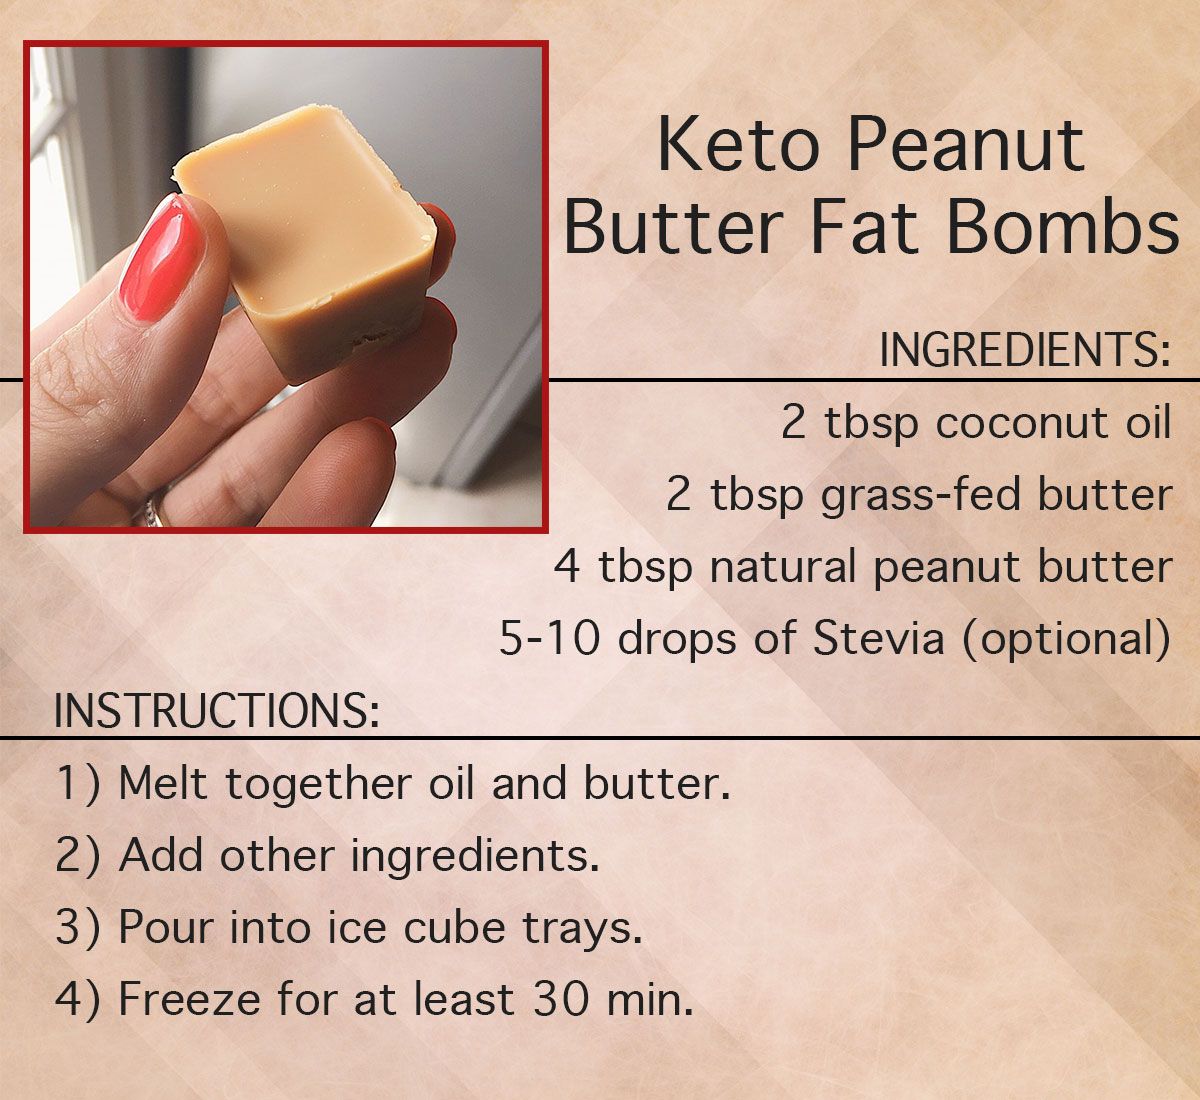 Keto Peanut Butter Fat Bomb Recipe Card